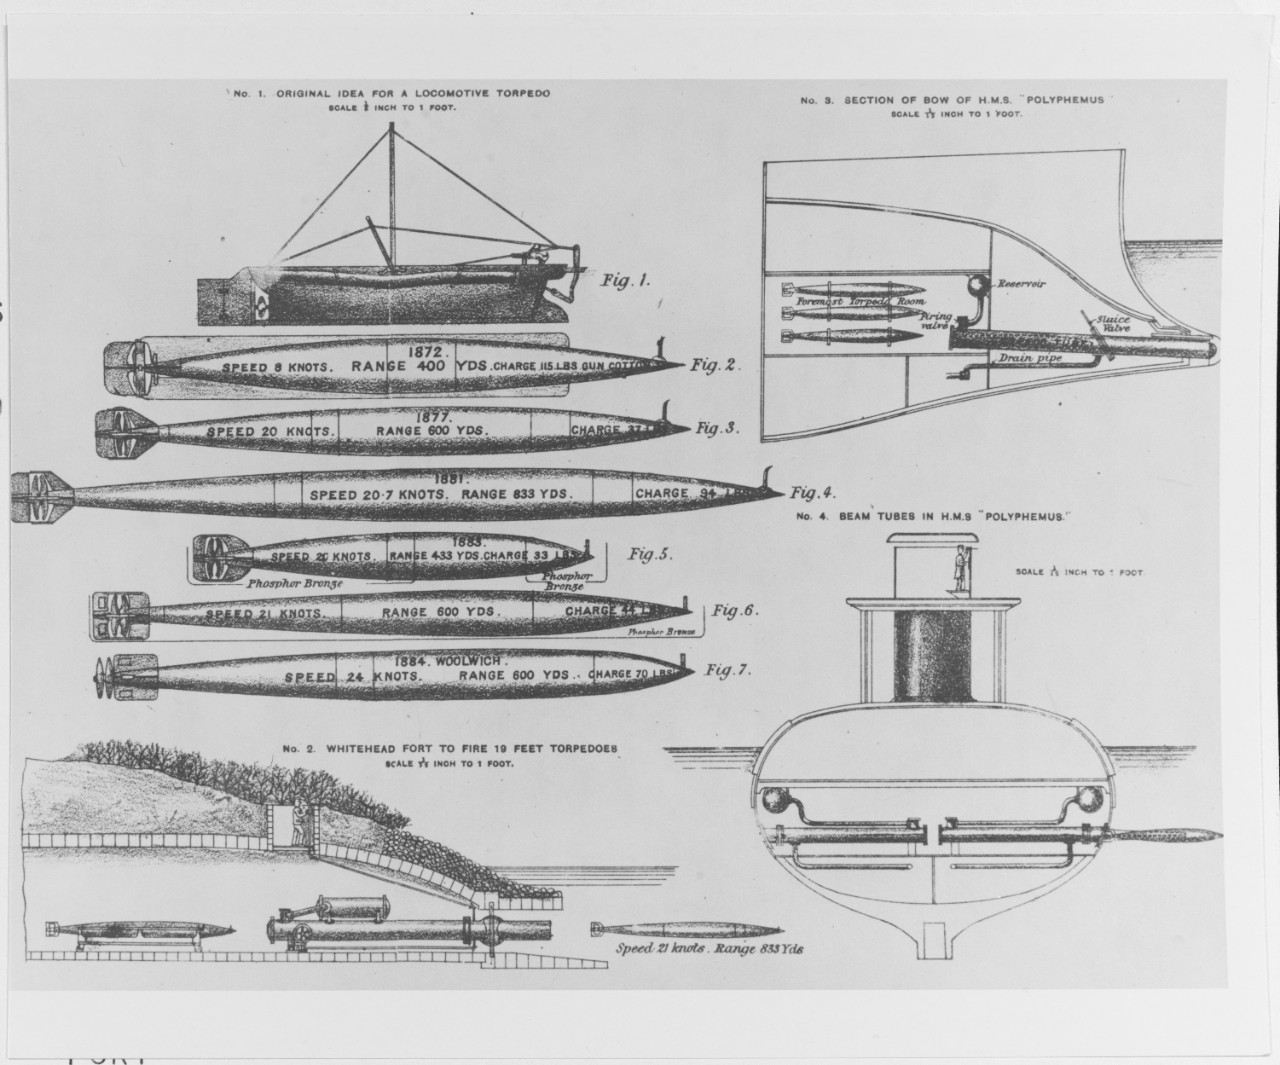 19th century torpedos